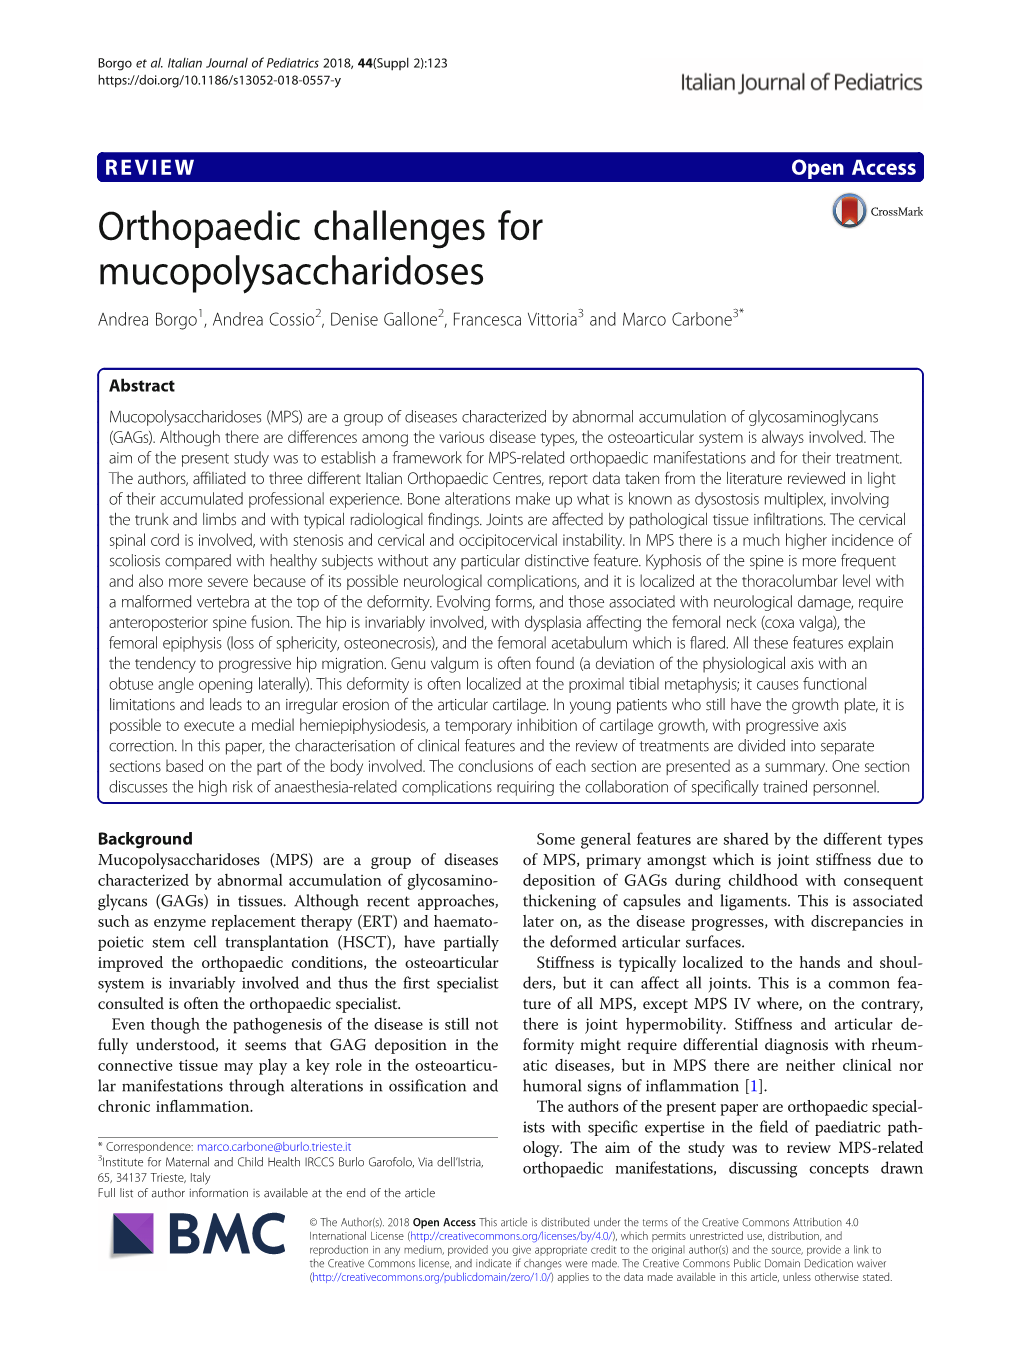 Orthopaedic Challenges for Mucopolysaccharidoses Andrea Borgo1, Andrea Cossio2, Denise Gallone2, Francesca Vittoria3 and Marco Carbone3*